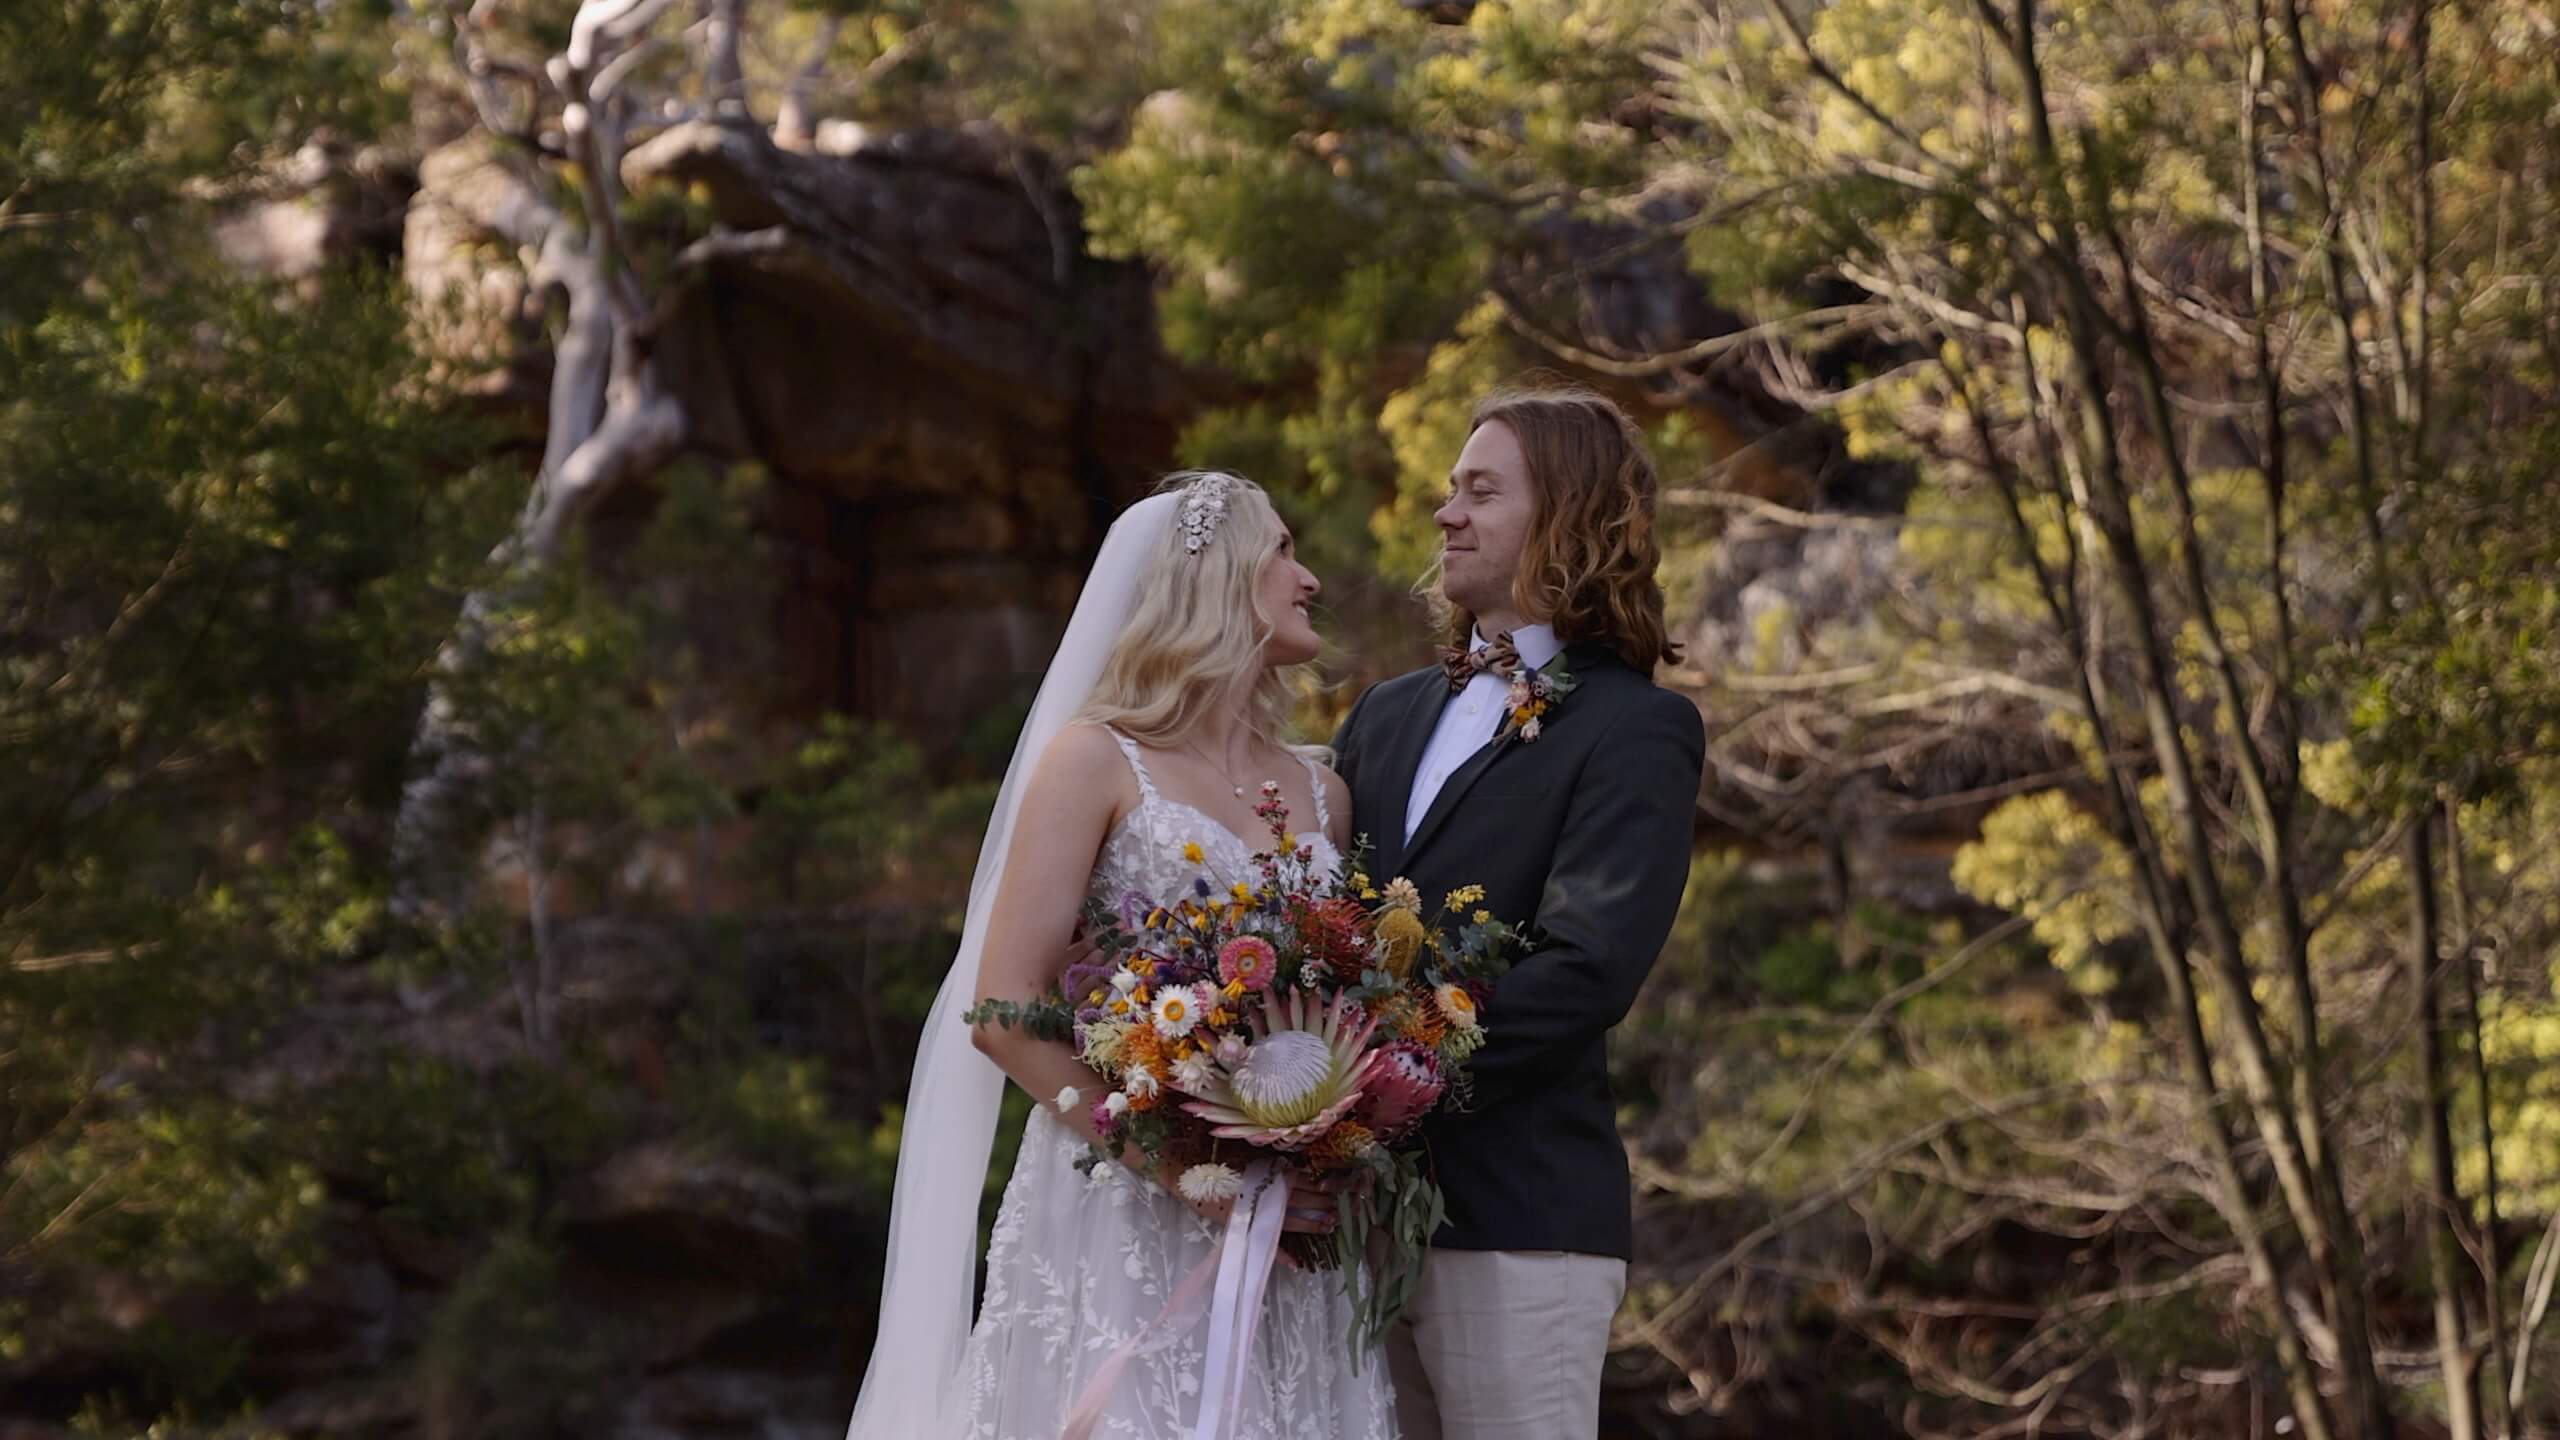 Emily + Tobias Short Film // Wattle Forest // Sydney Wedding Videography